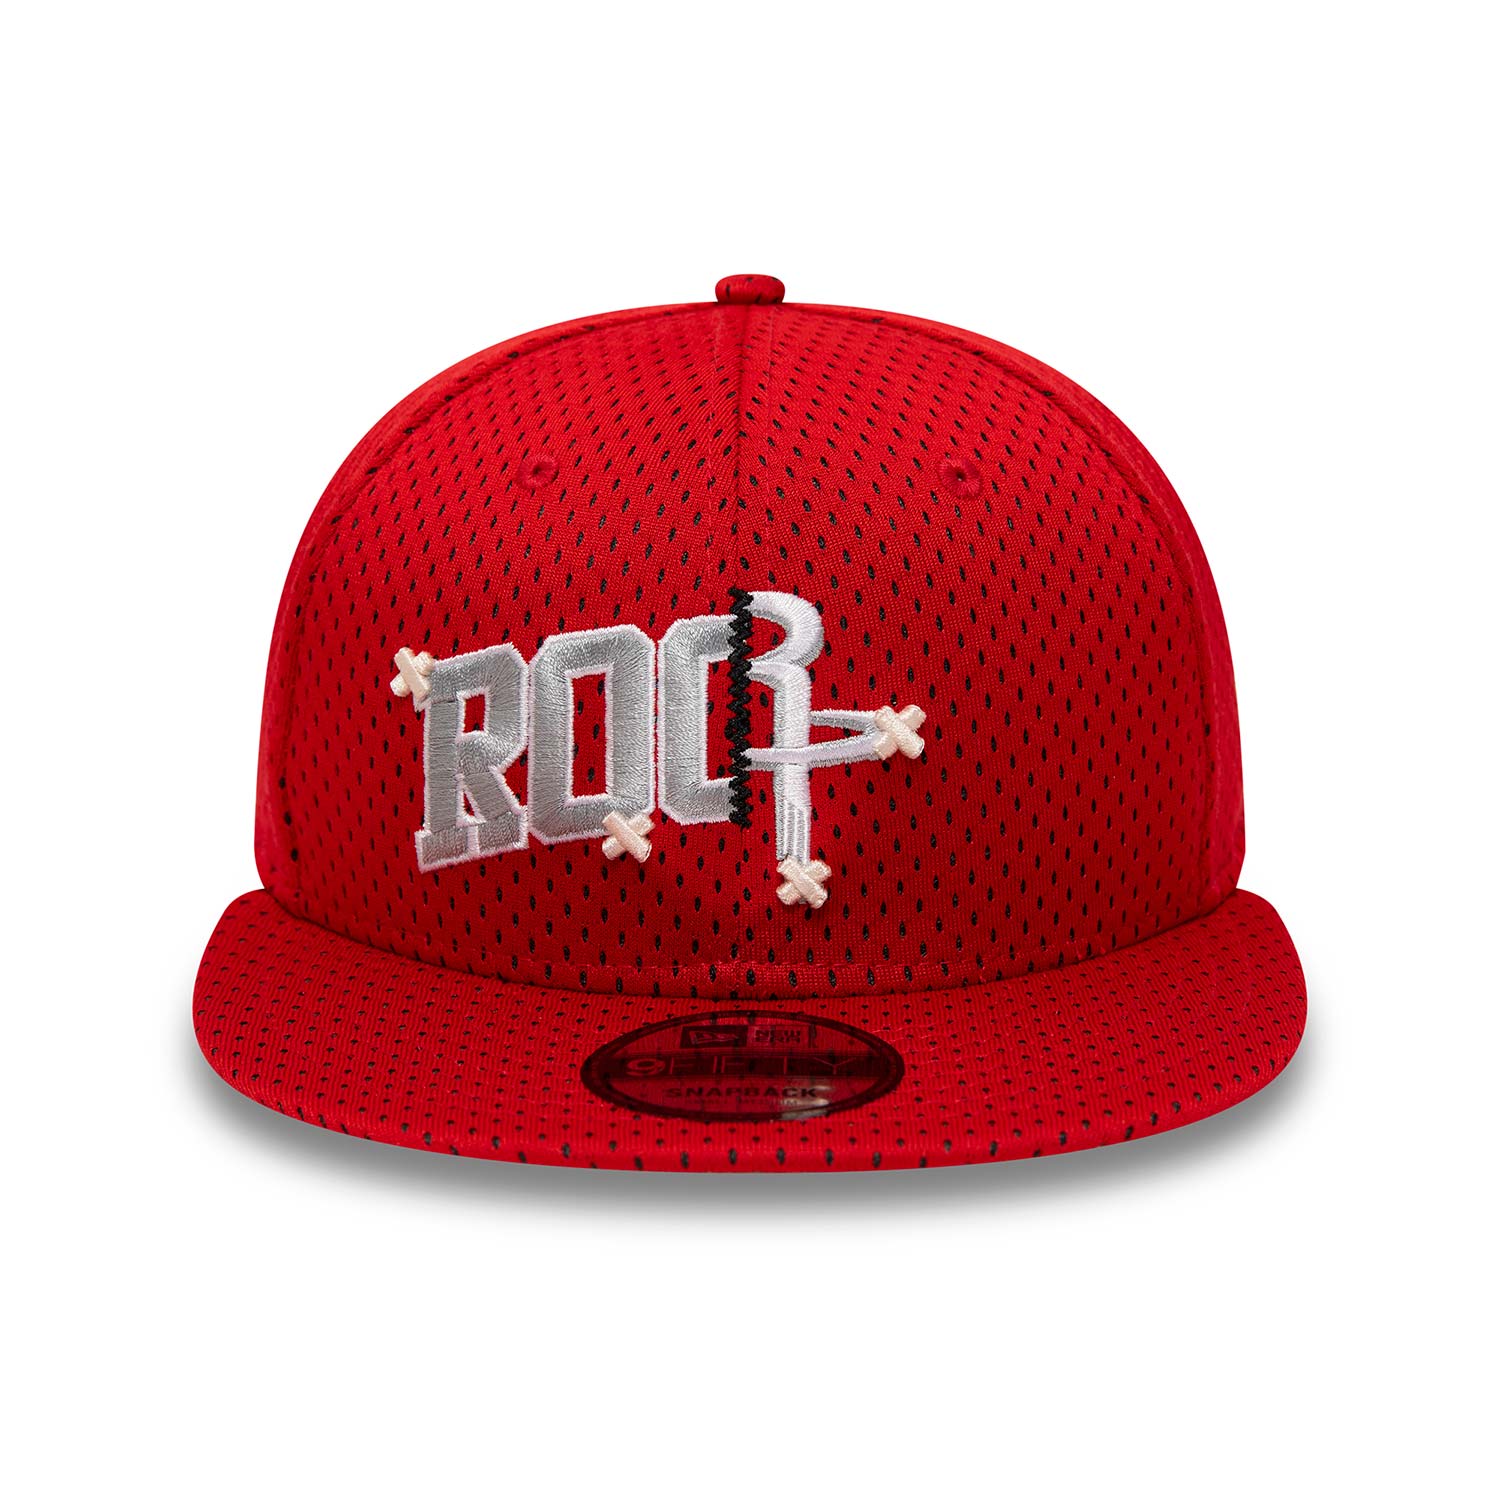 Houston Rockets Half Stitch Red 9FIFTY Snapback Cap